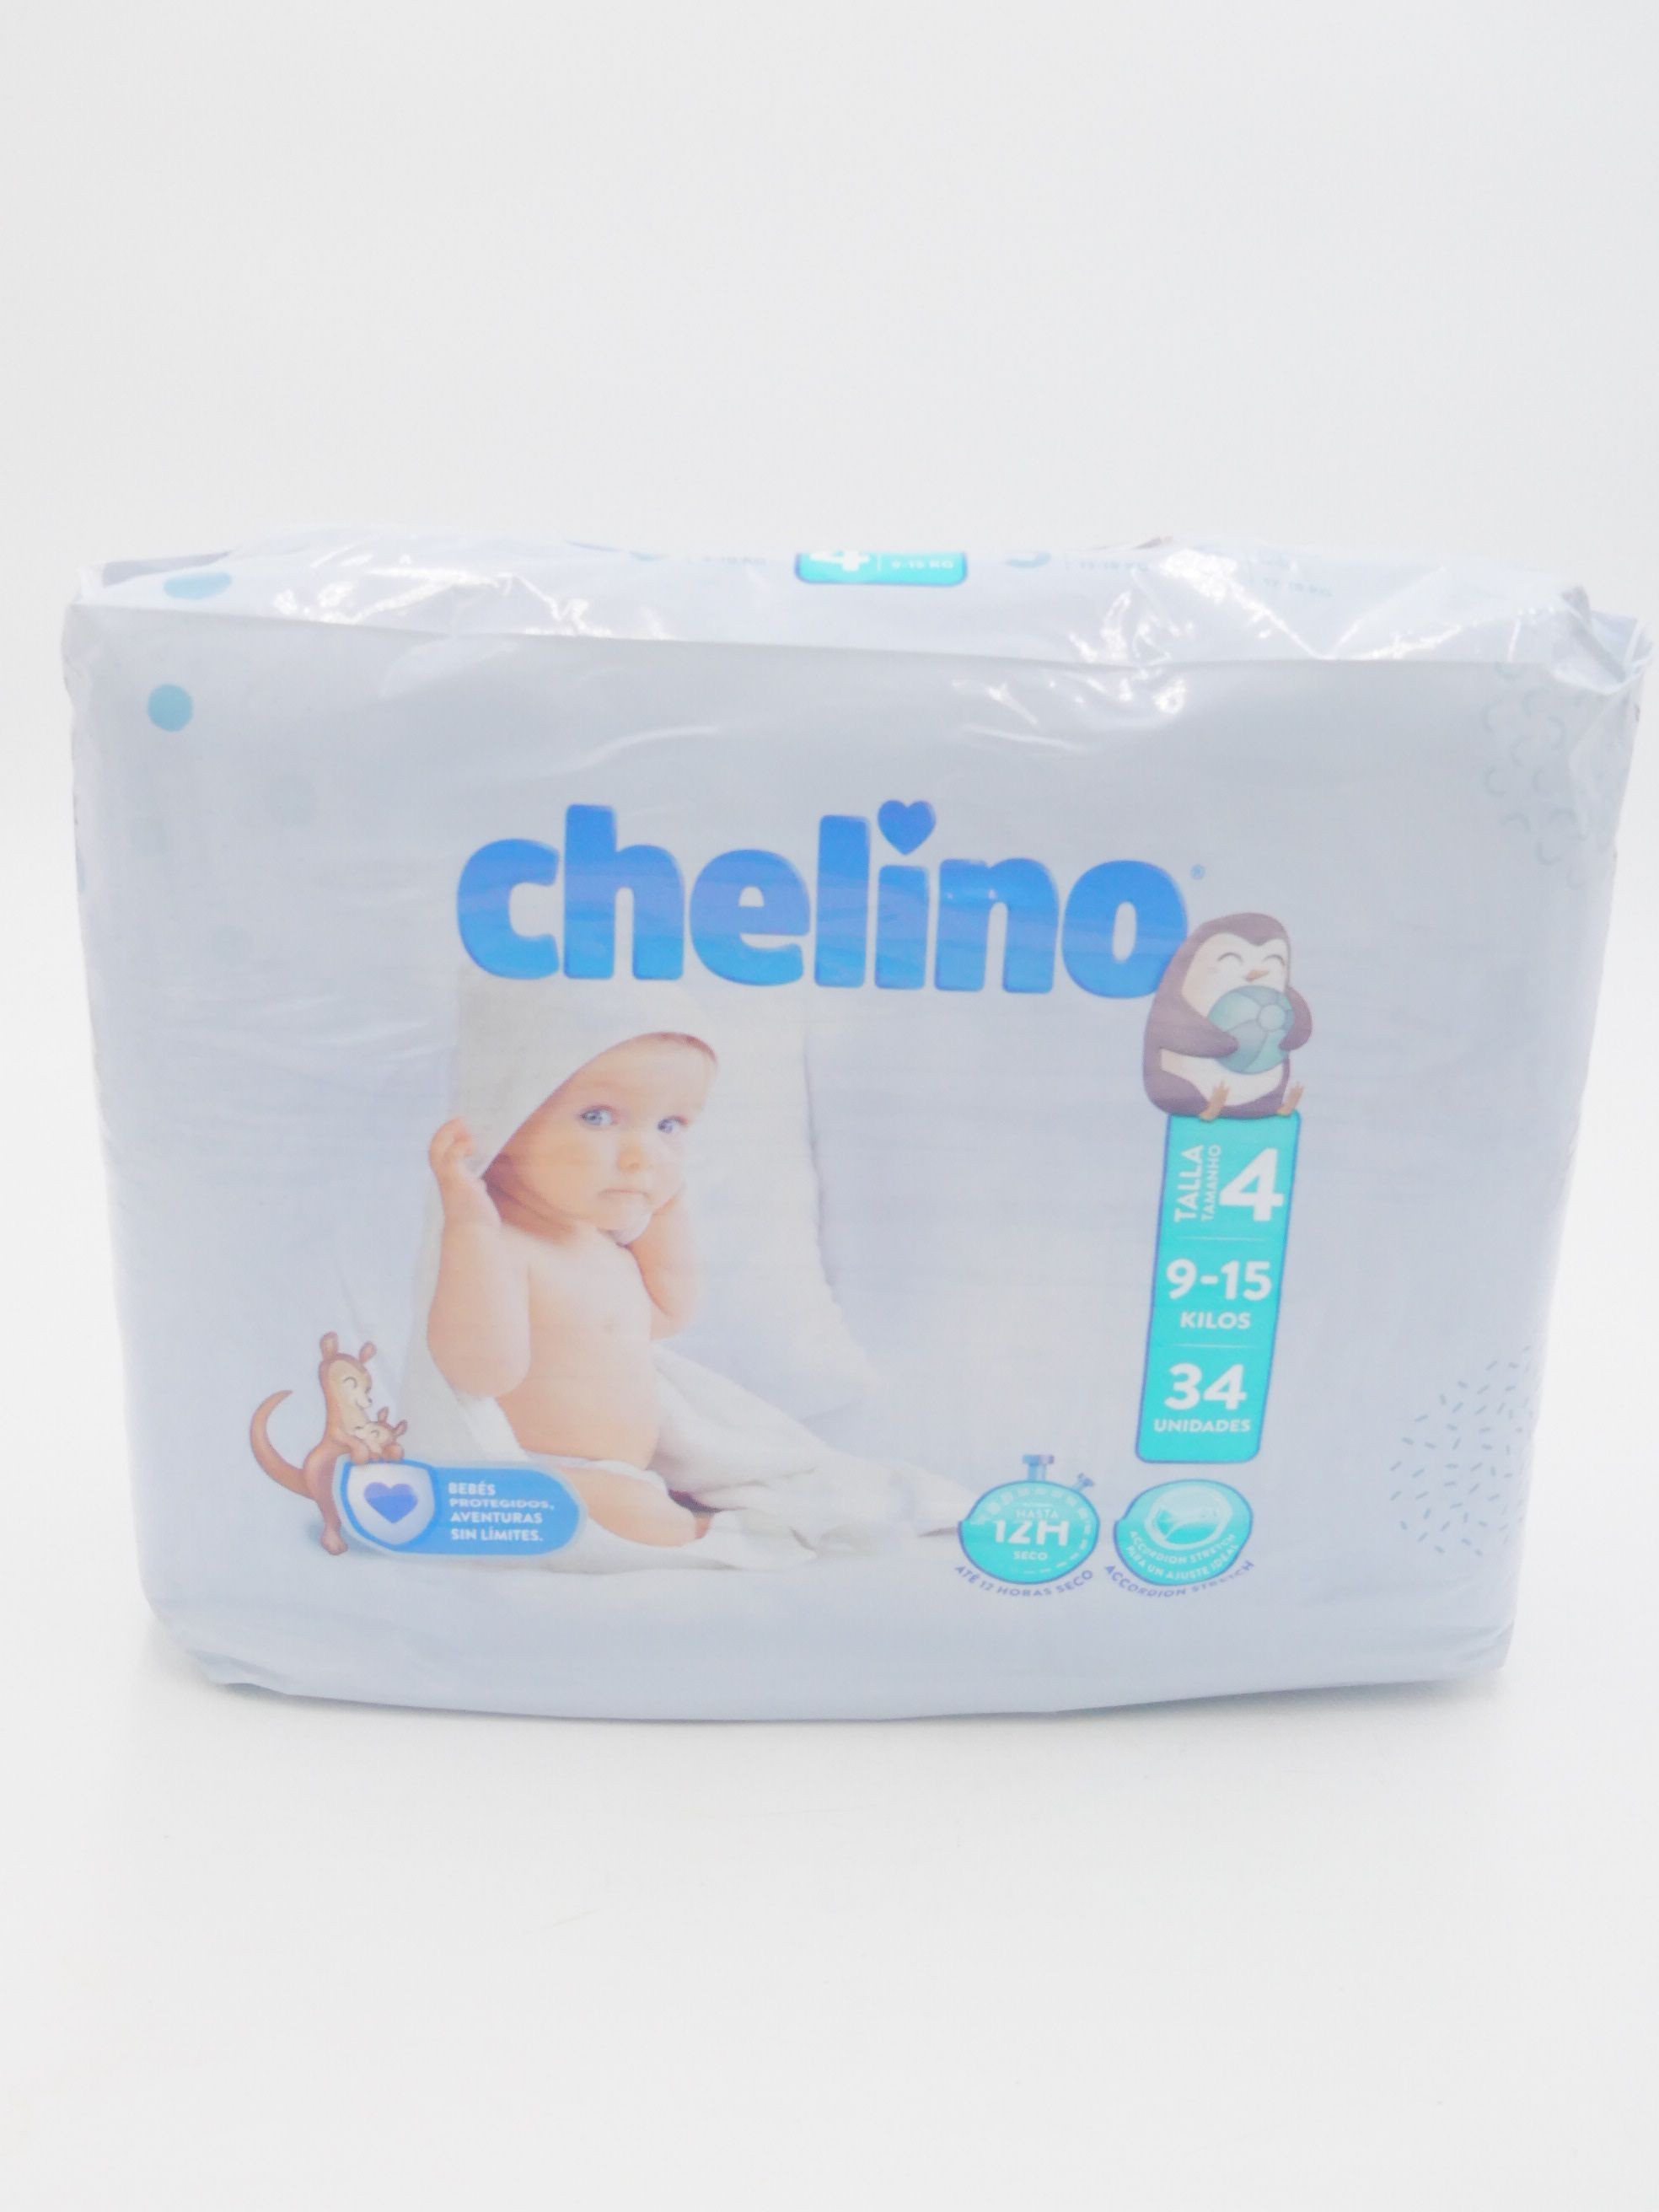 Comprar CHELINO PAÑAL INFANTIL TALLA 3 (4-10 KG)